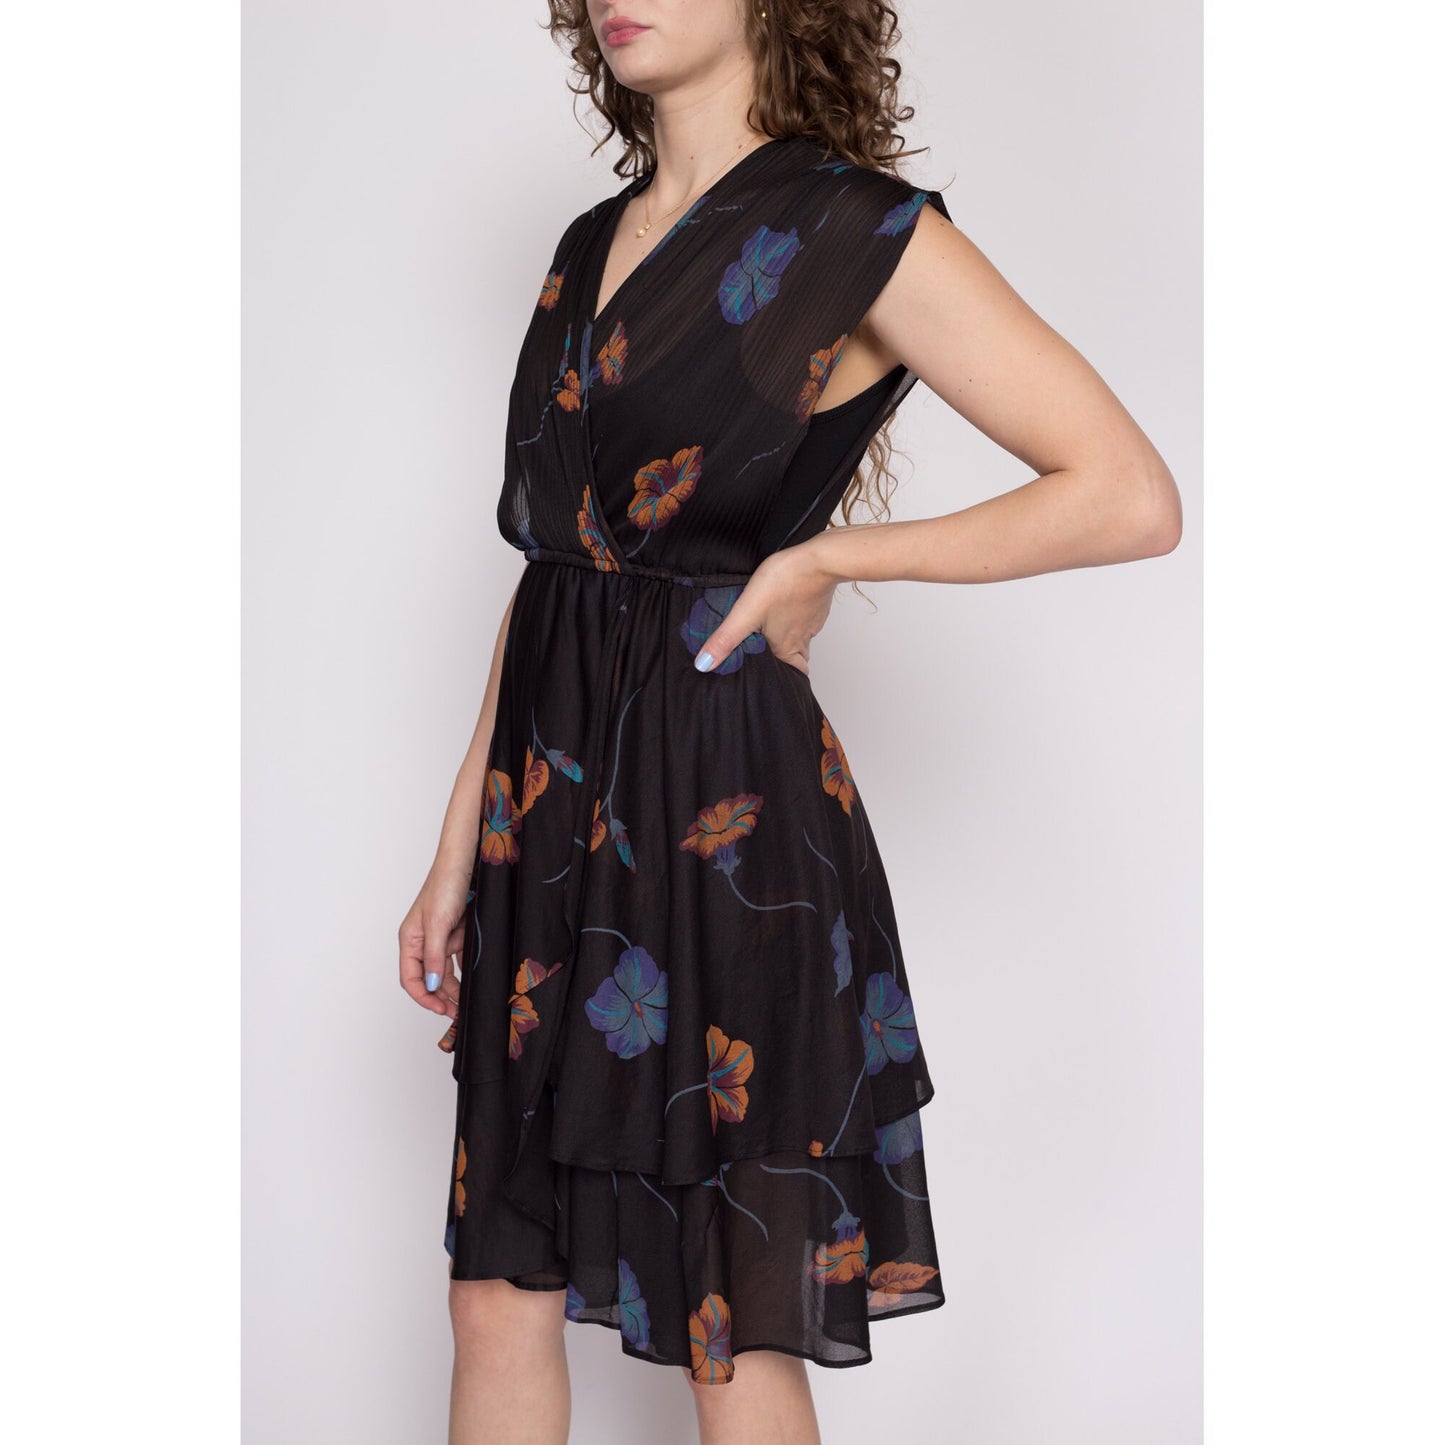 Medium 70s Sheer Black Floral Dress | Vintage Boho V Neck Blouson Mini Dress